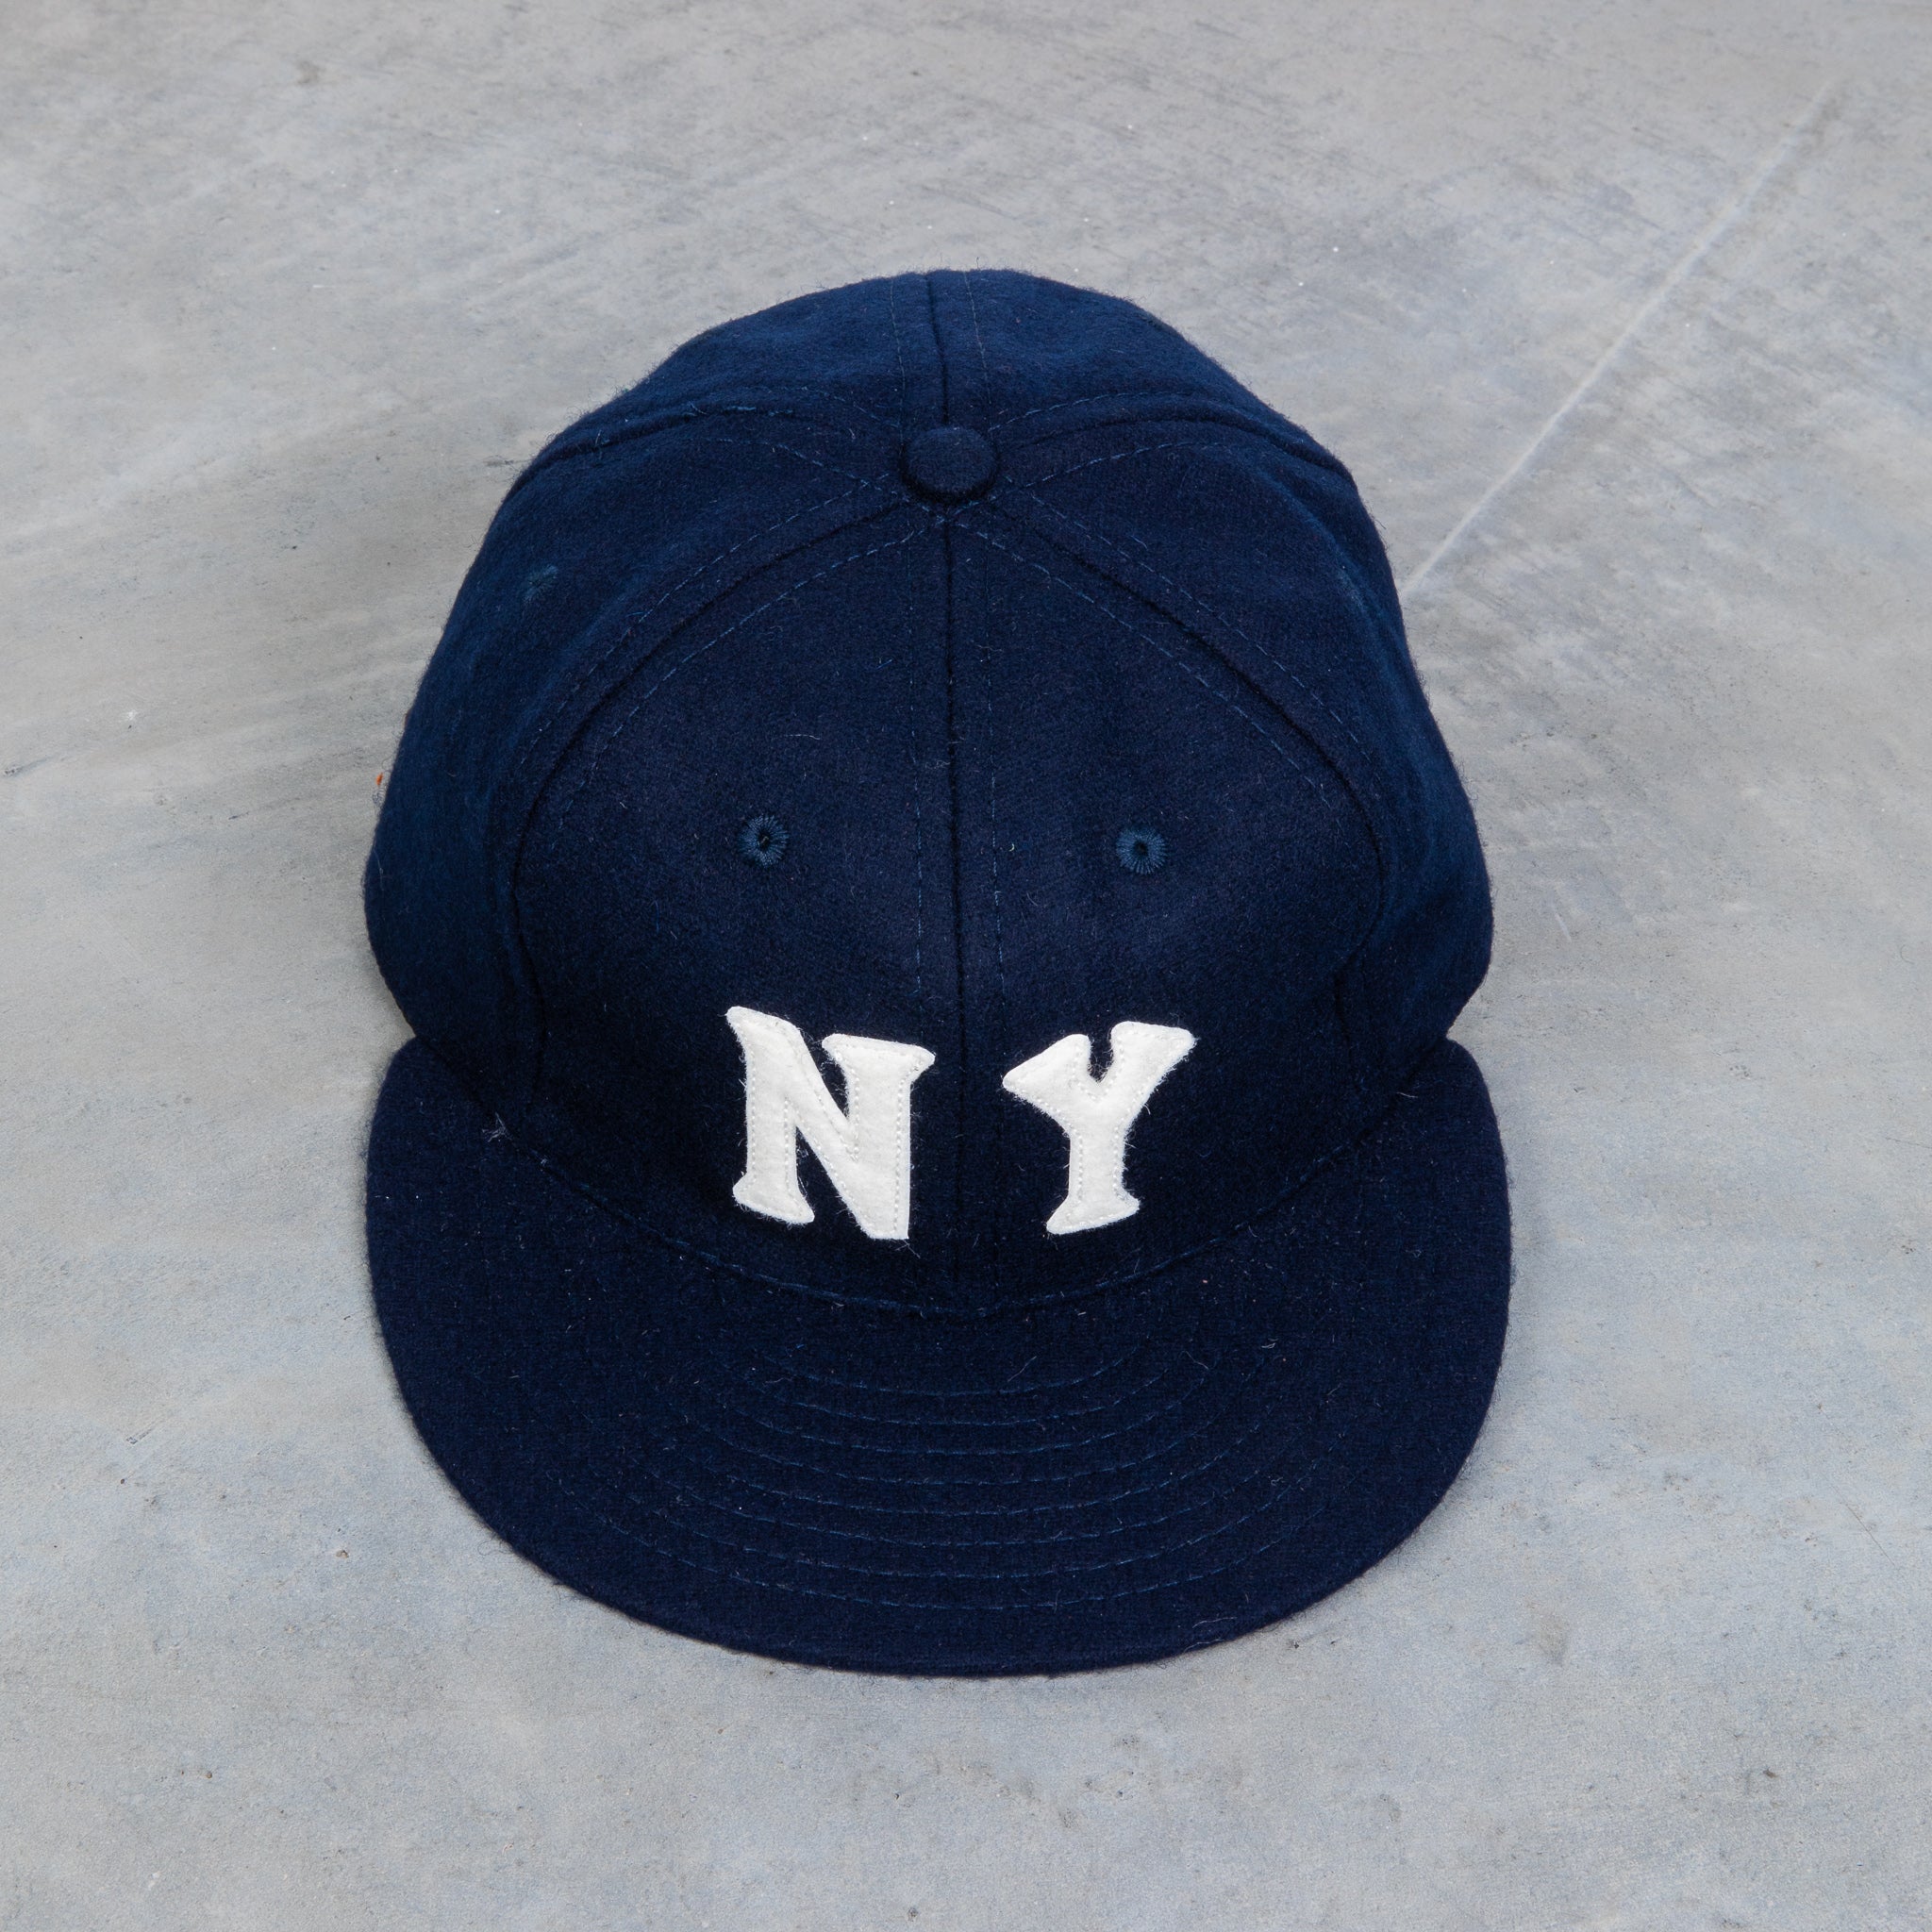 New York Black Yankees